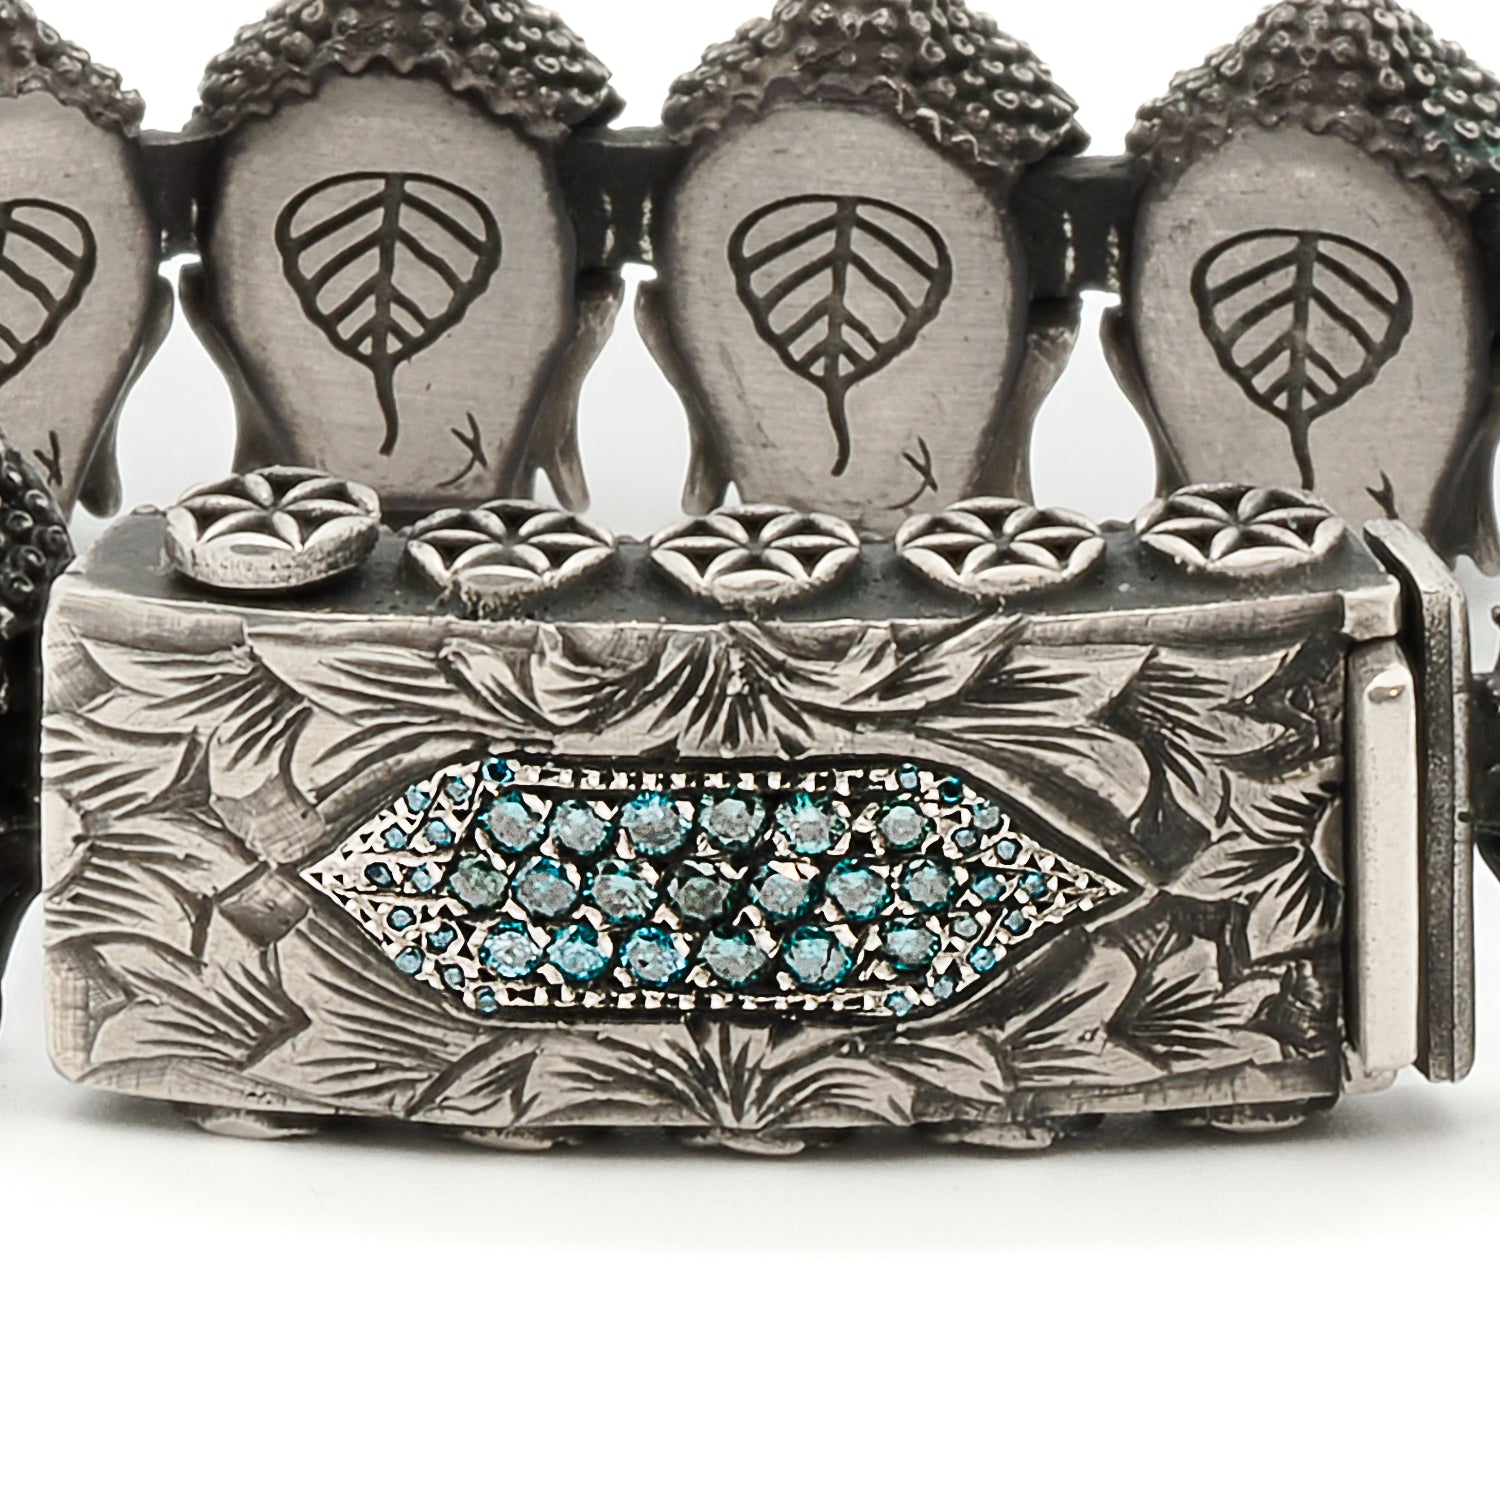 Handmade Fine Jewelry - Buddha Peace Bracelet, a symbol of inner peace and unity.